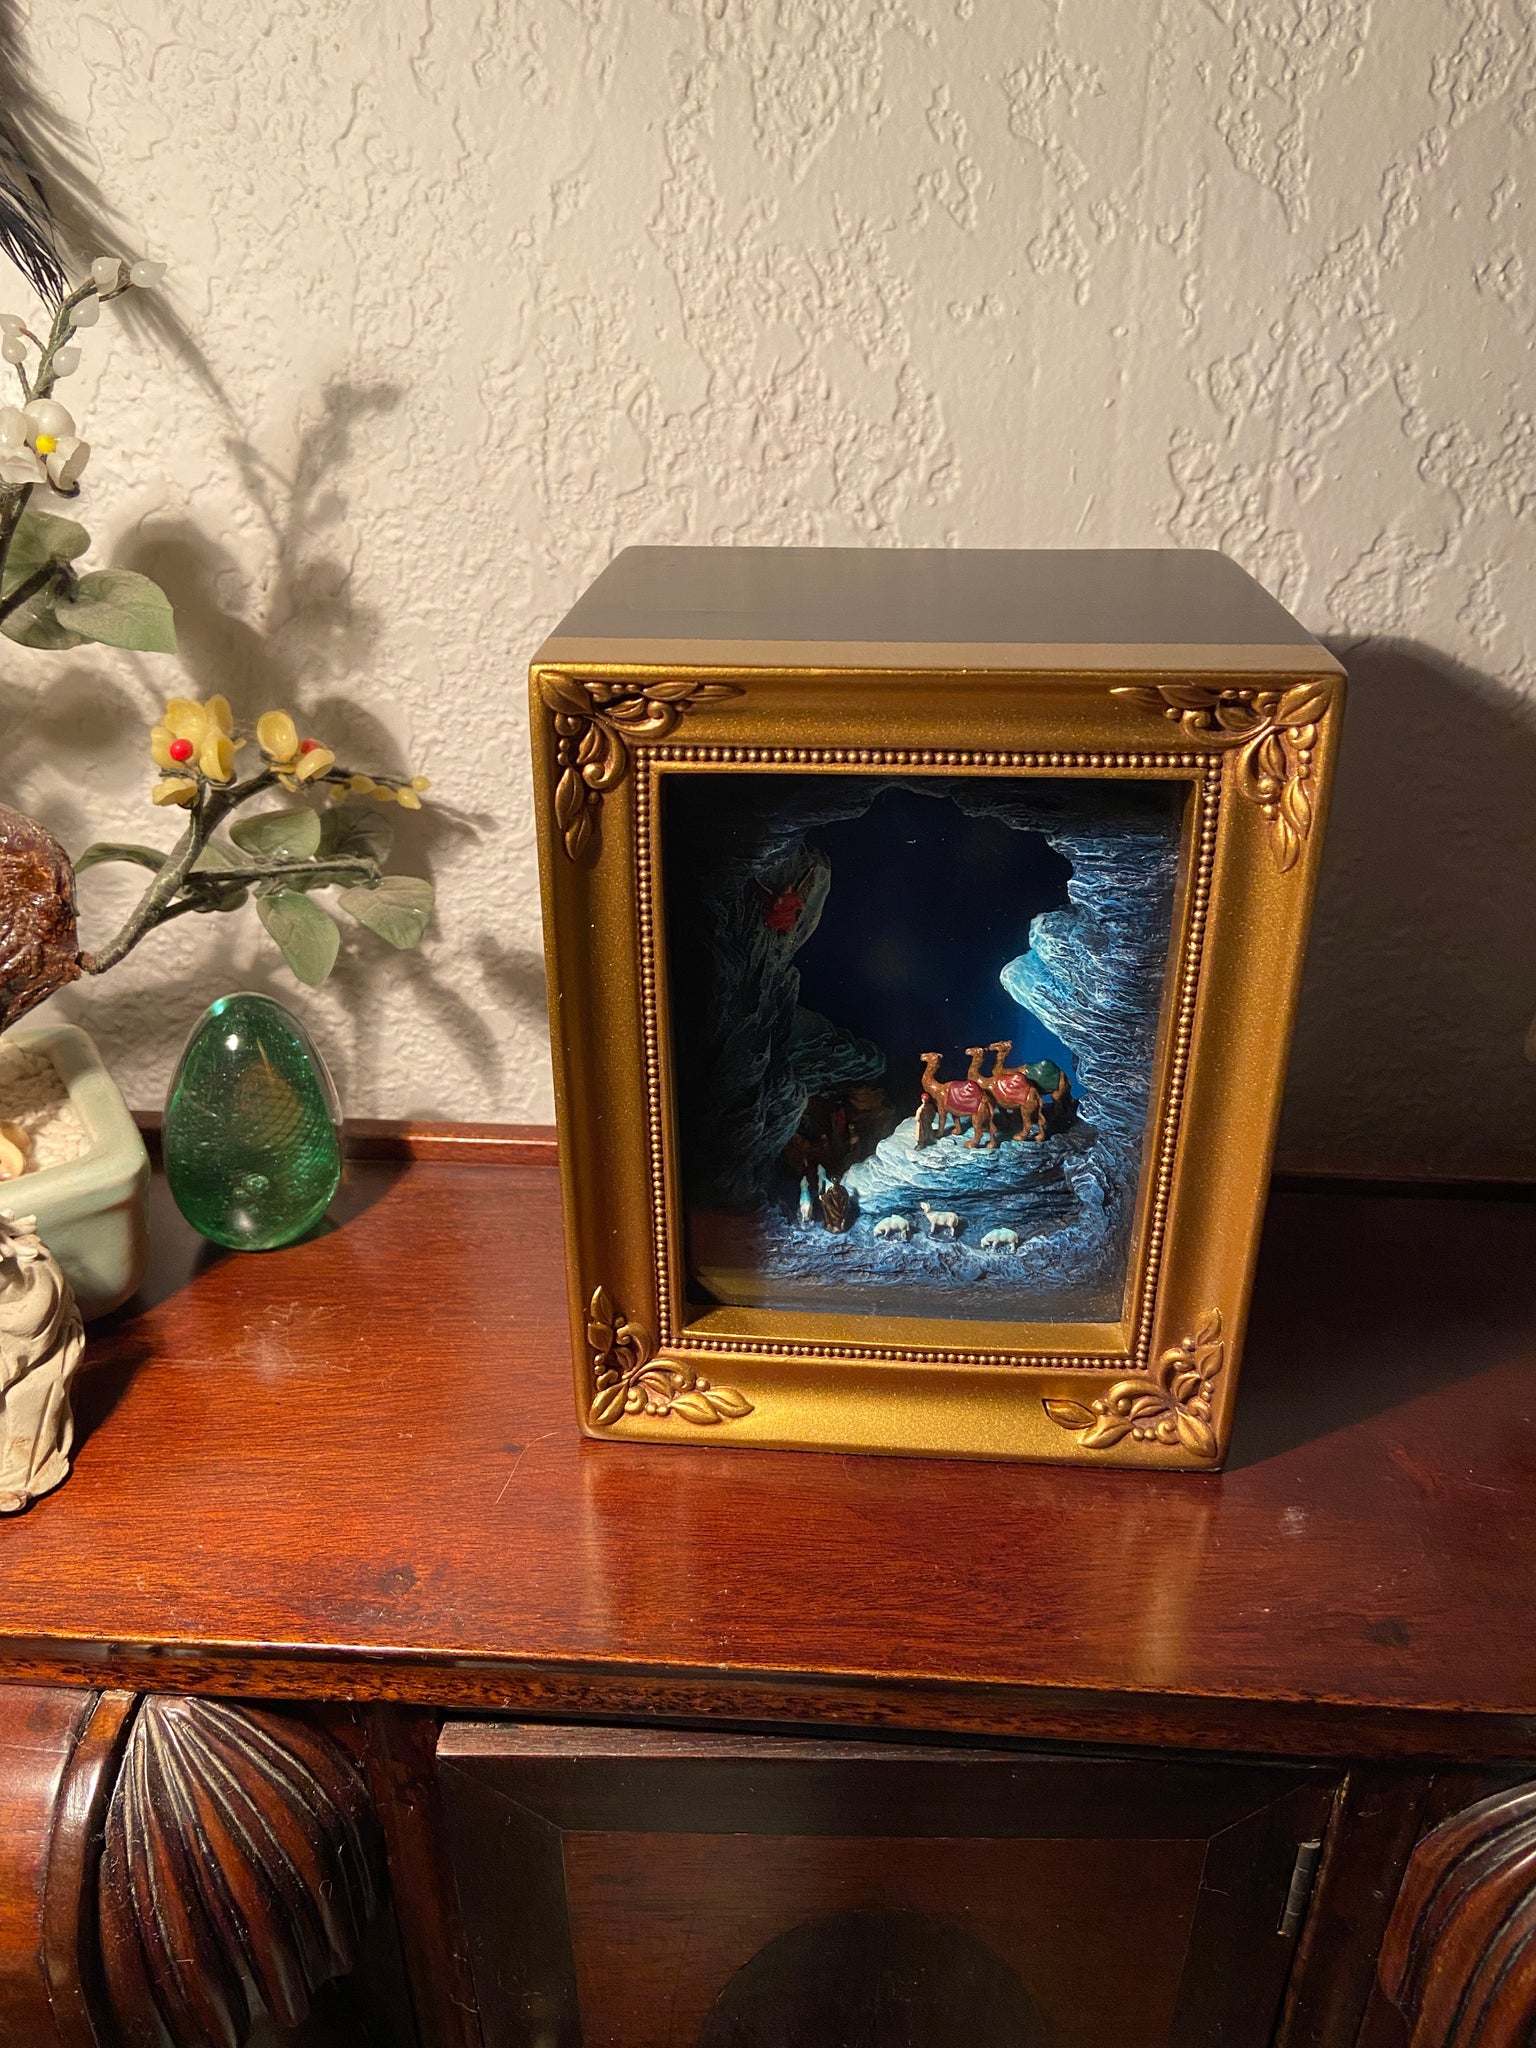 “The Guiding Light” Nativity Robert Olszewski Masterpiece Gallery of Light Collection